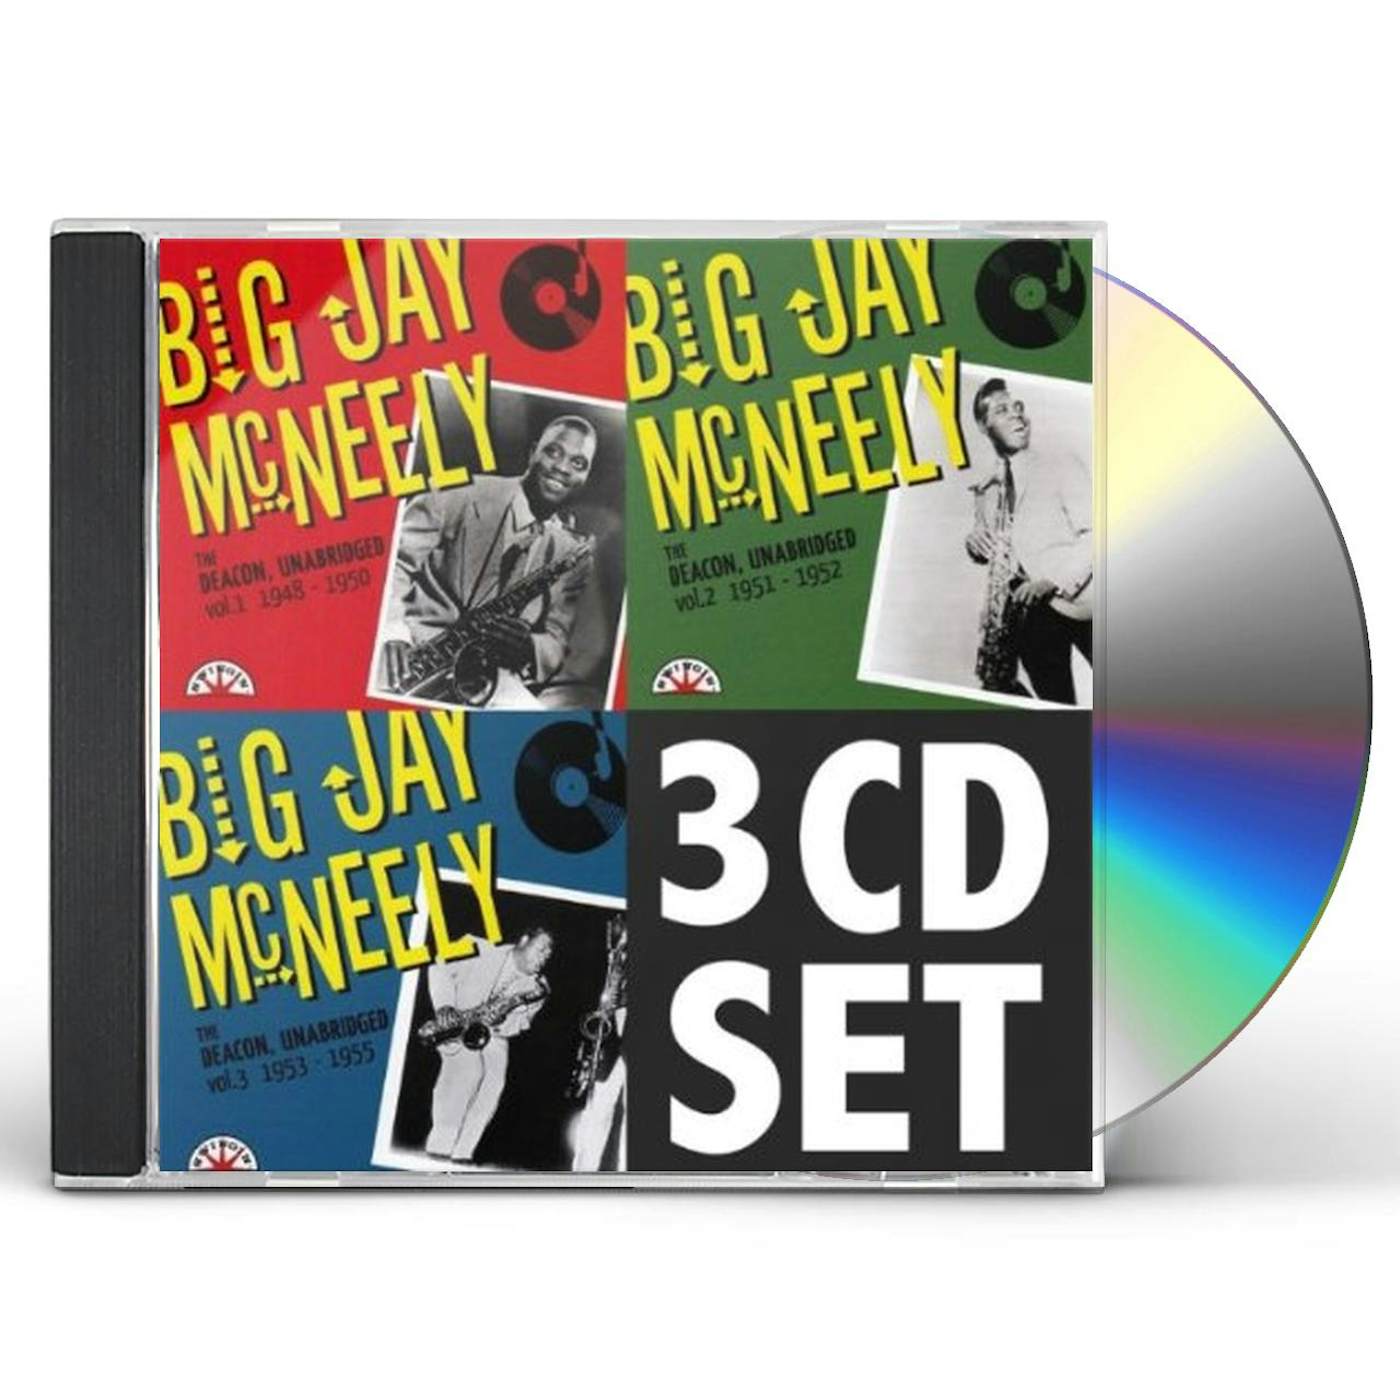 Big Jay McNeely THE DEACON UNABRIDGED 1948-1955 3CD SET CD